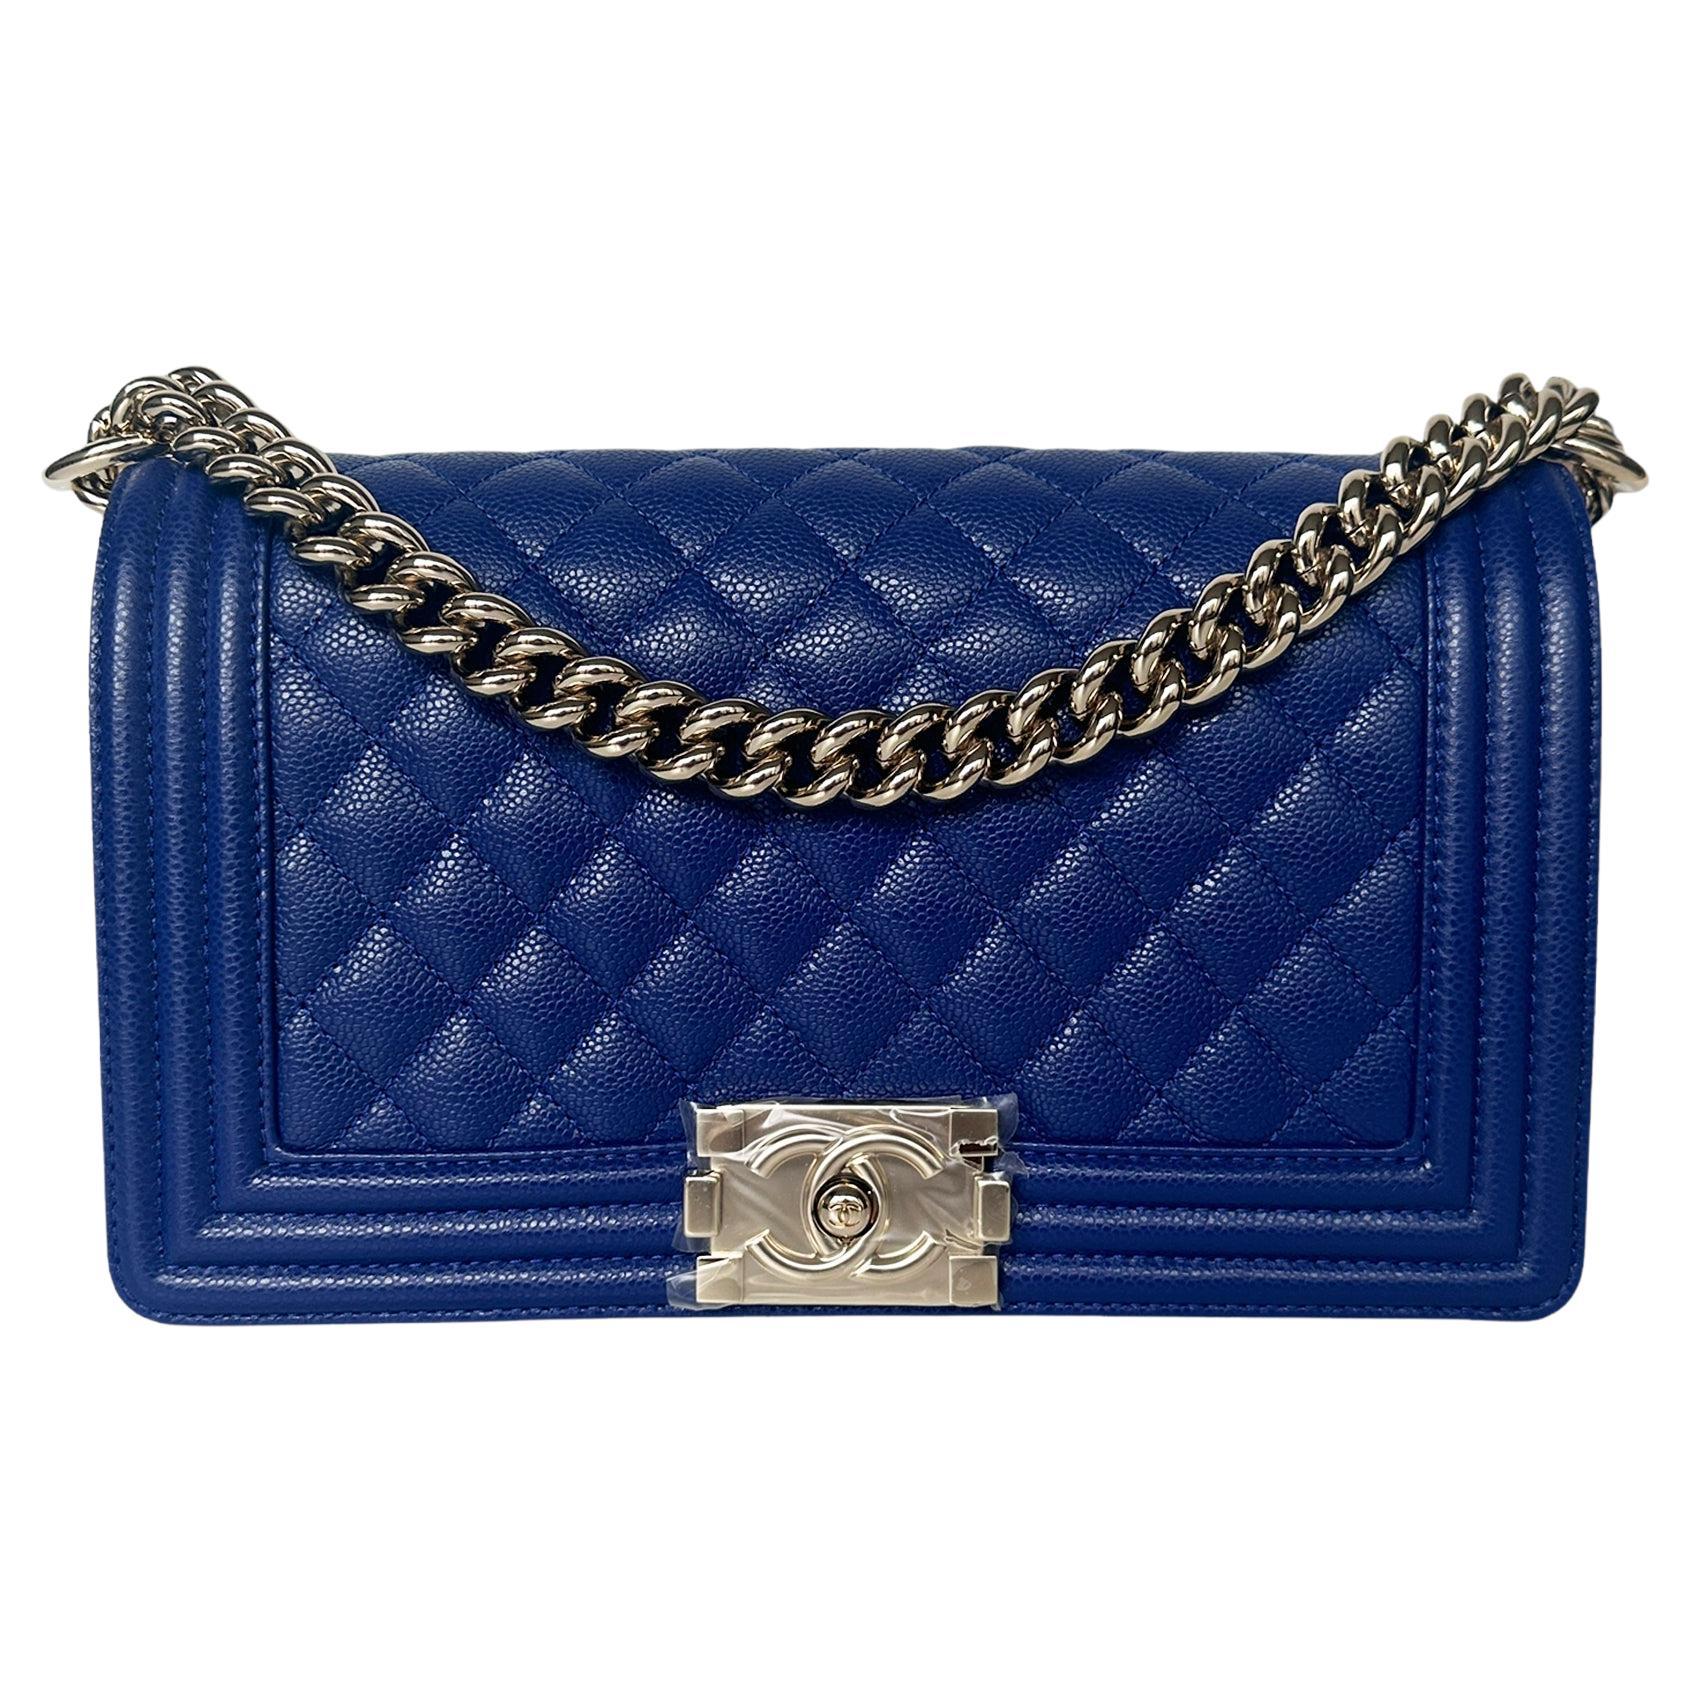 Chanel NEW Cobalt Blue Caviar Leather Quilted Medium Boy Bag